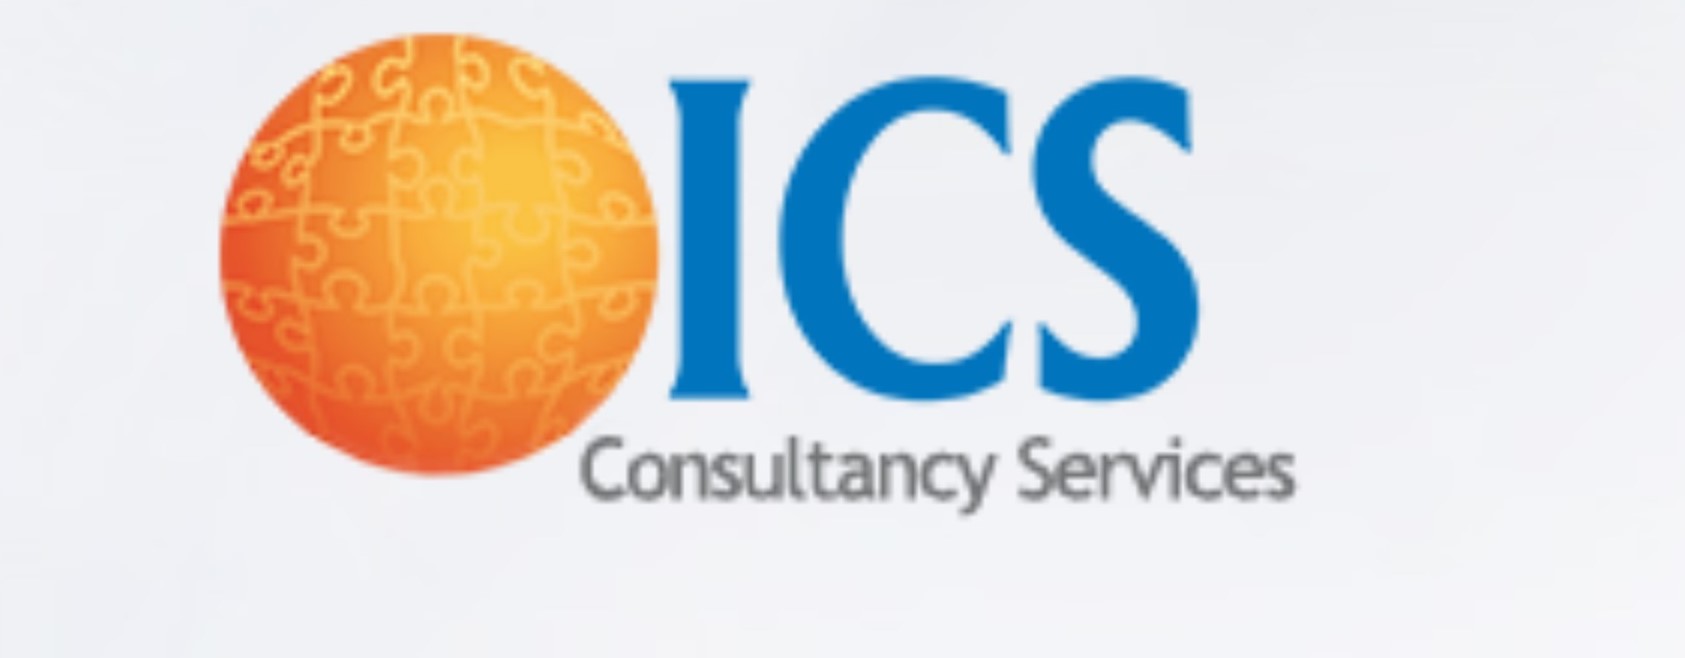 ICS Consultancy Services Pvt. Ltd.